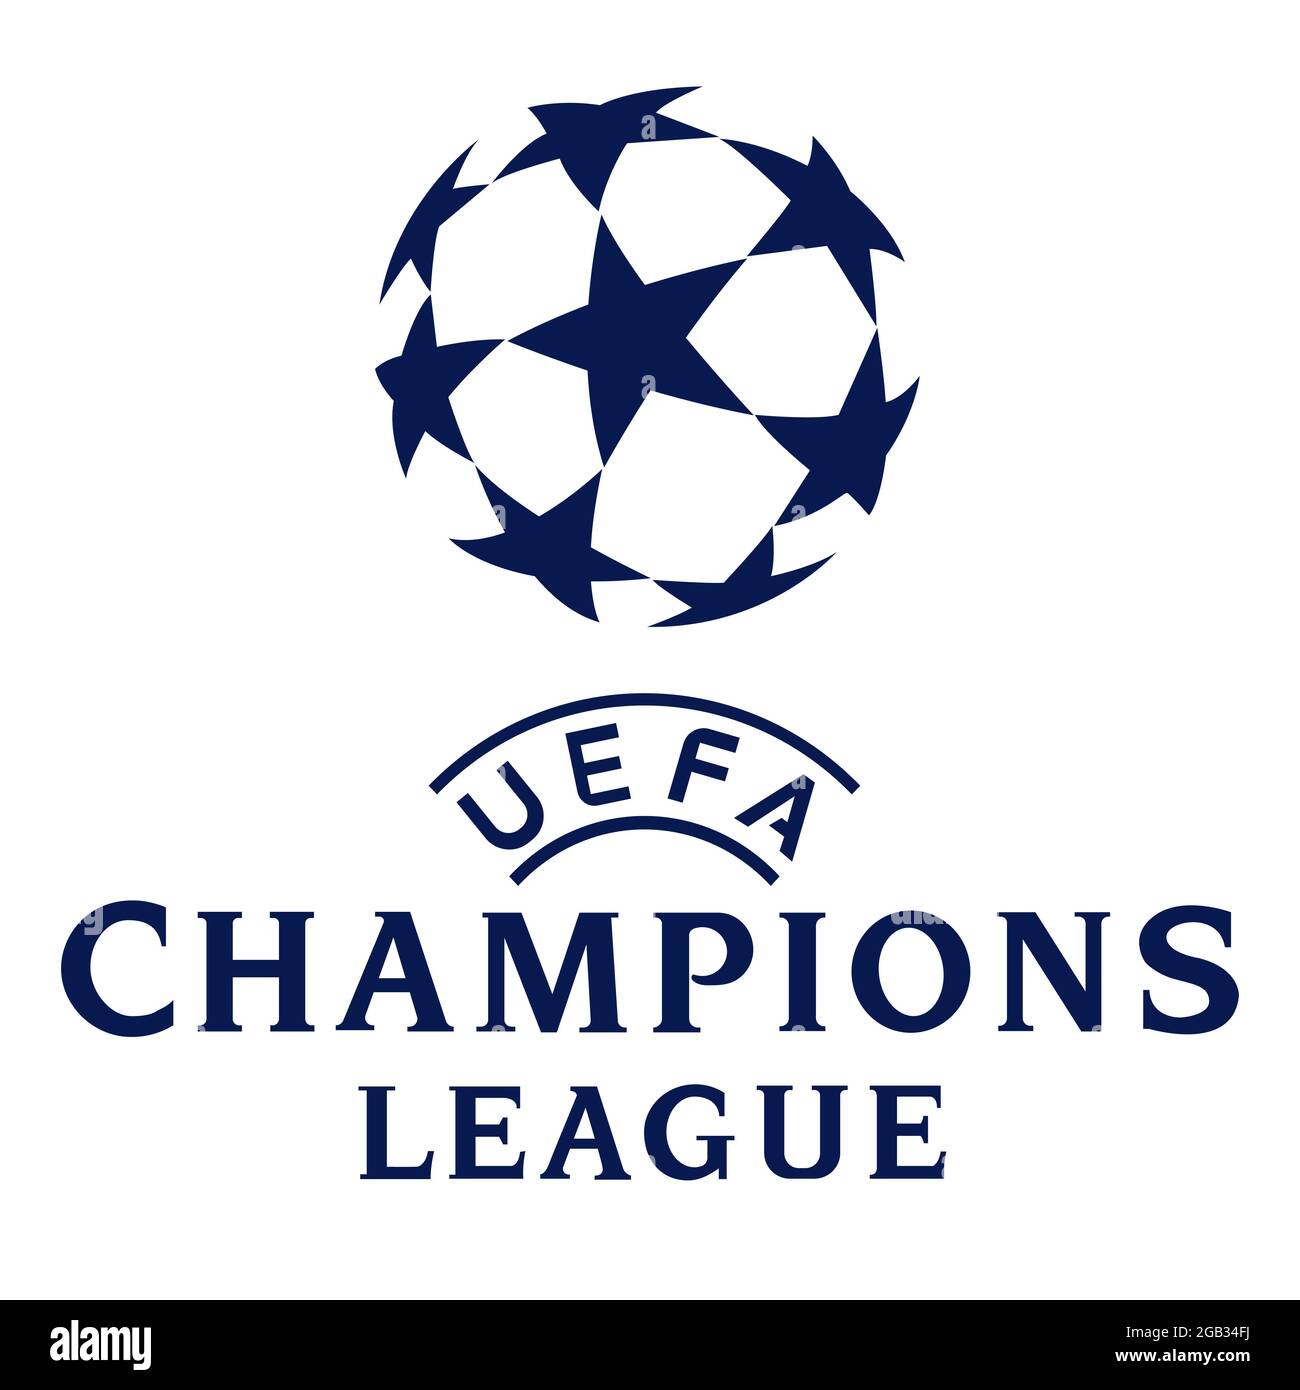 Official UEFA Champions League logo. Vector illustration Stock Vector